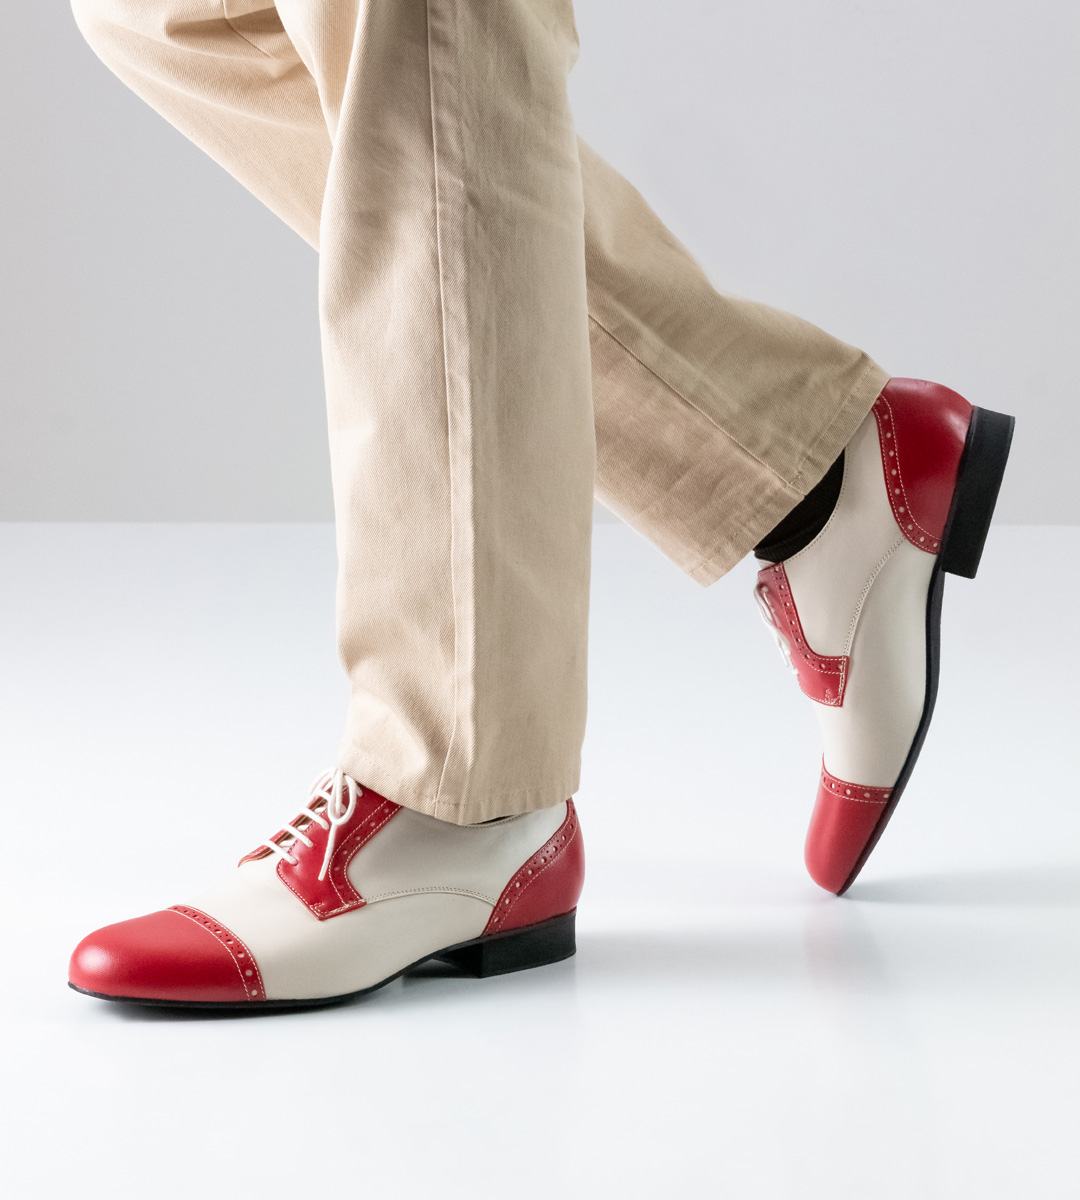 Werner Kern men's dance shoe with micro heel in combination with beige trousers